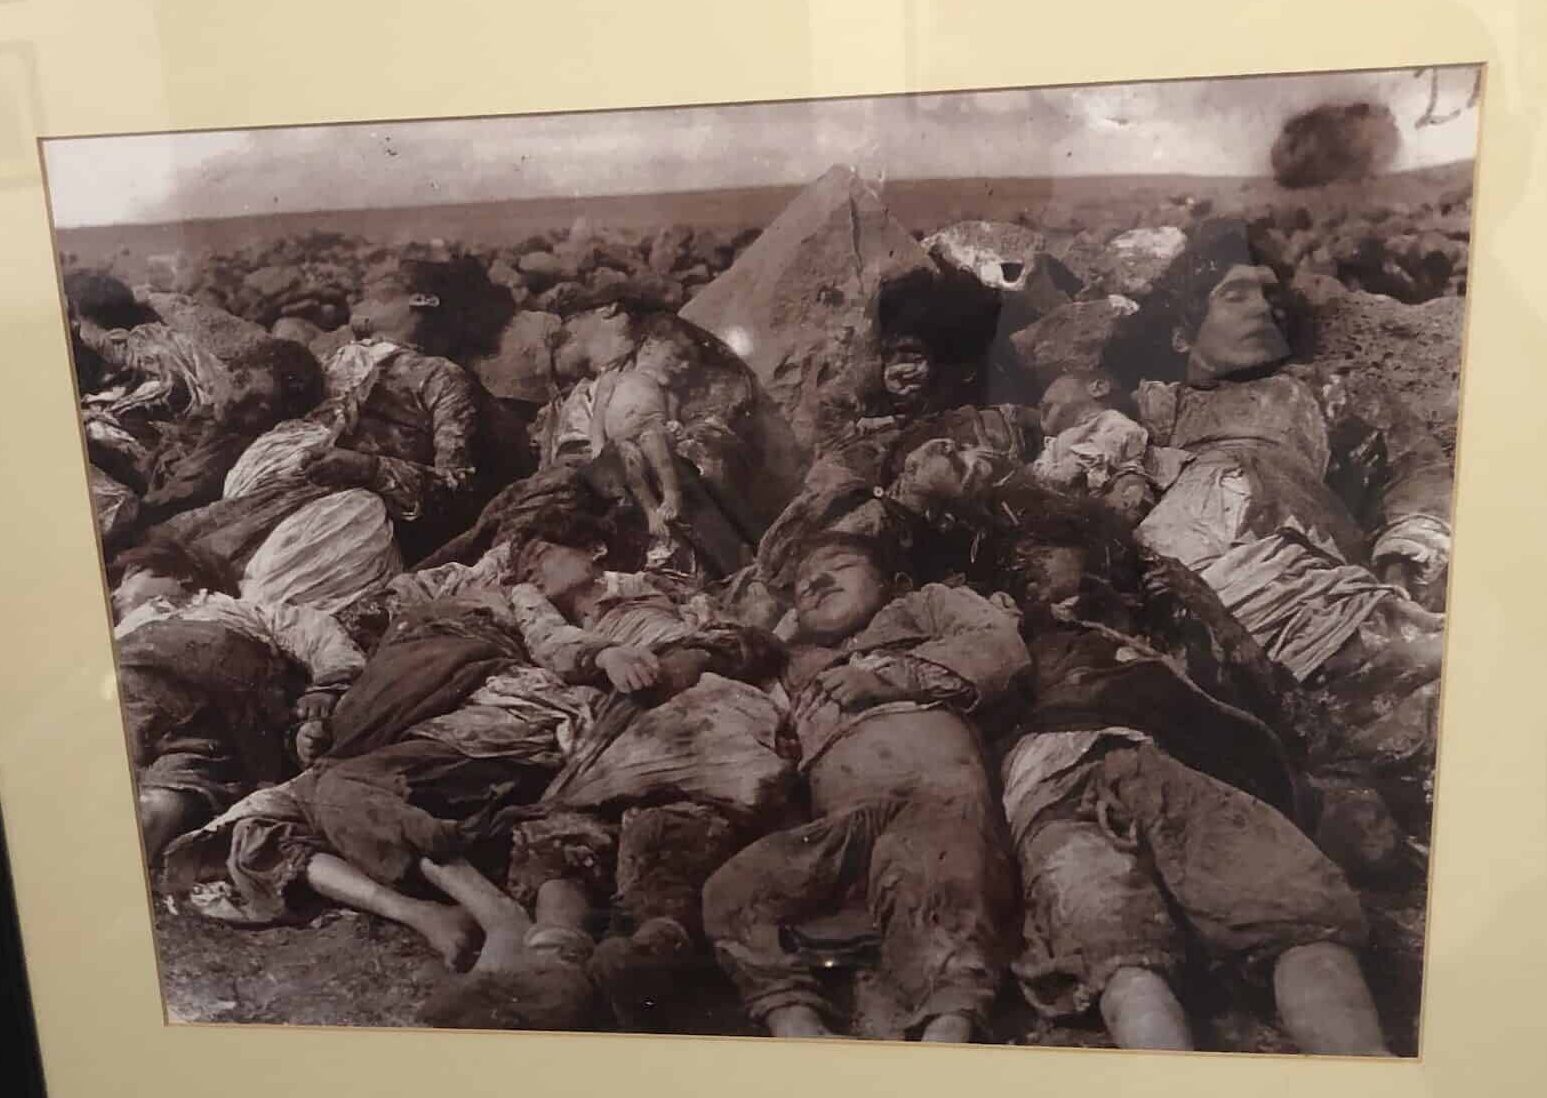 Photo of women and children allegedly massacred by Armenians near Kars